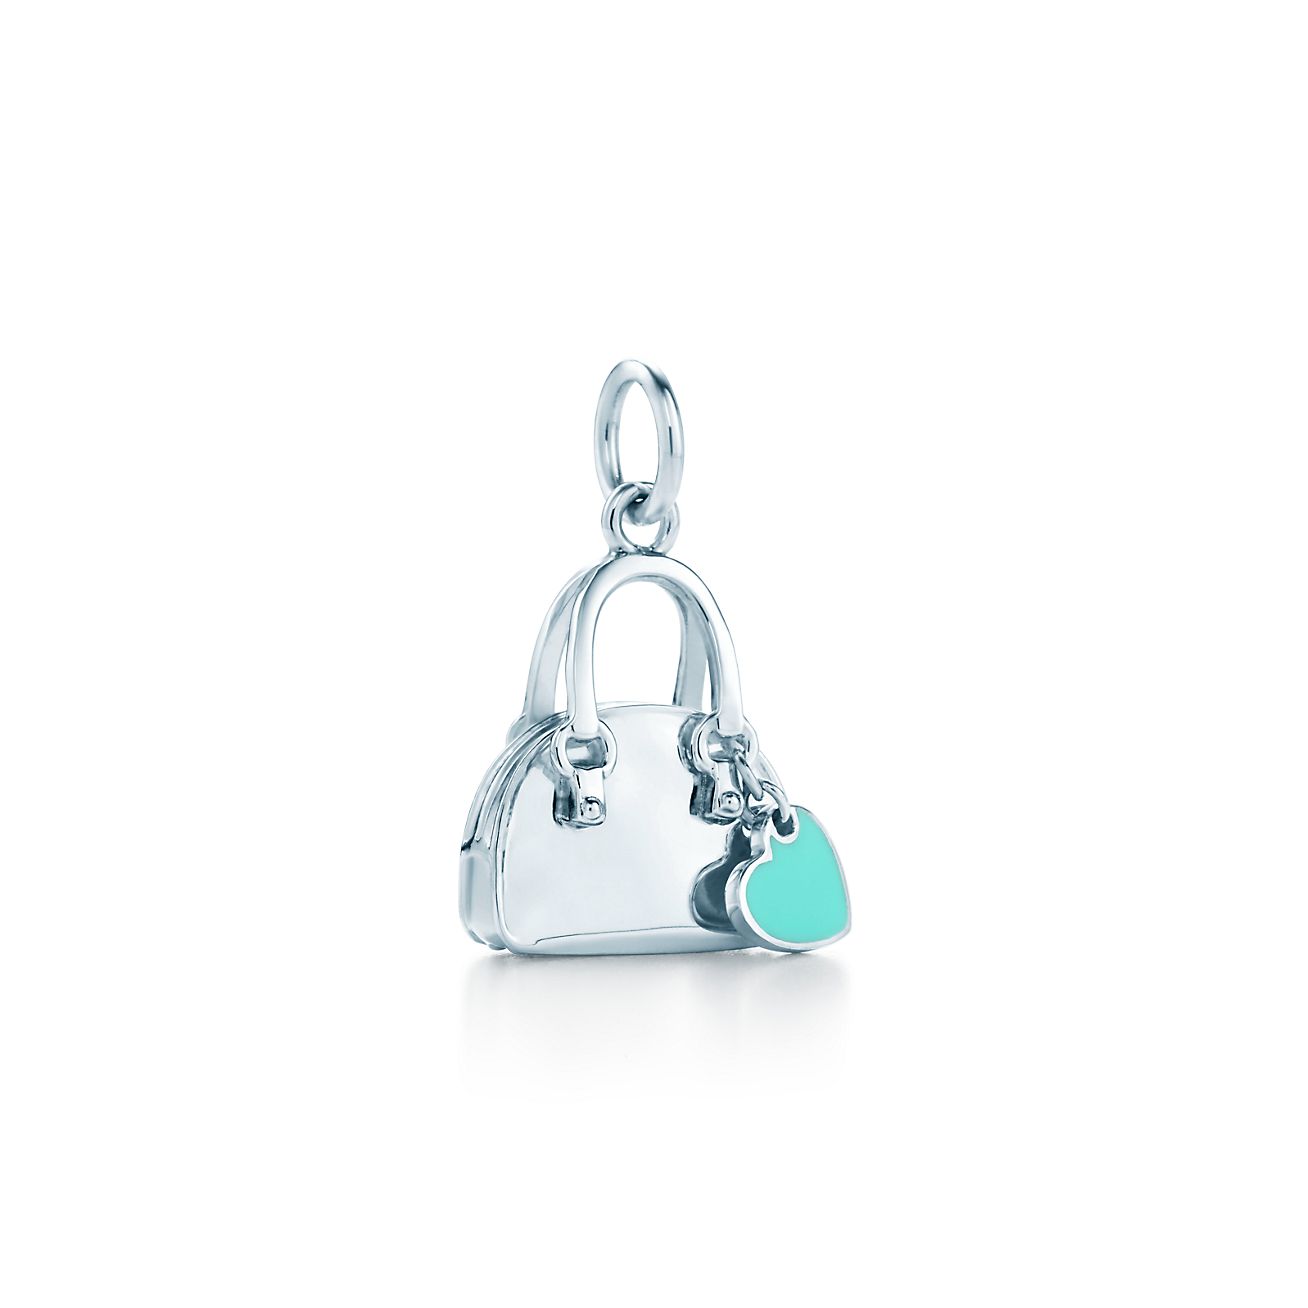 Handbag charm in sterling silver with Tiffany Blue® enamel finish